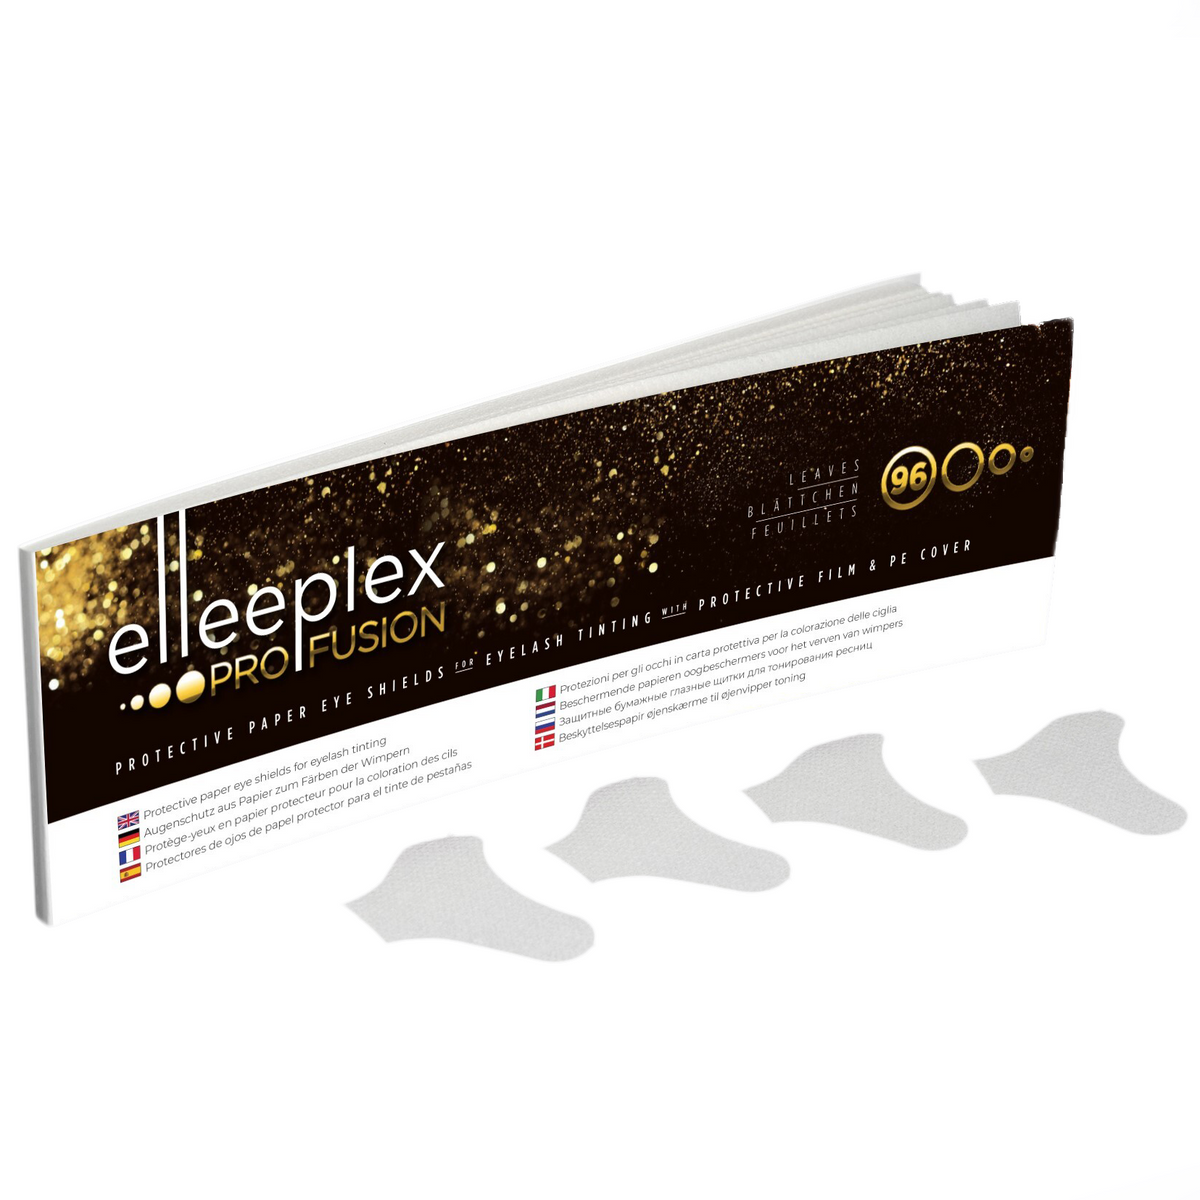 Elleeplex Profusion Paper Eye Shields